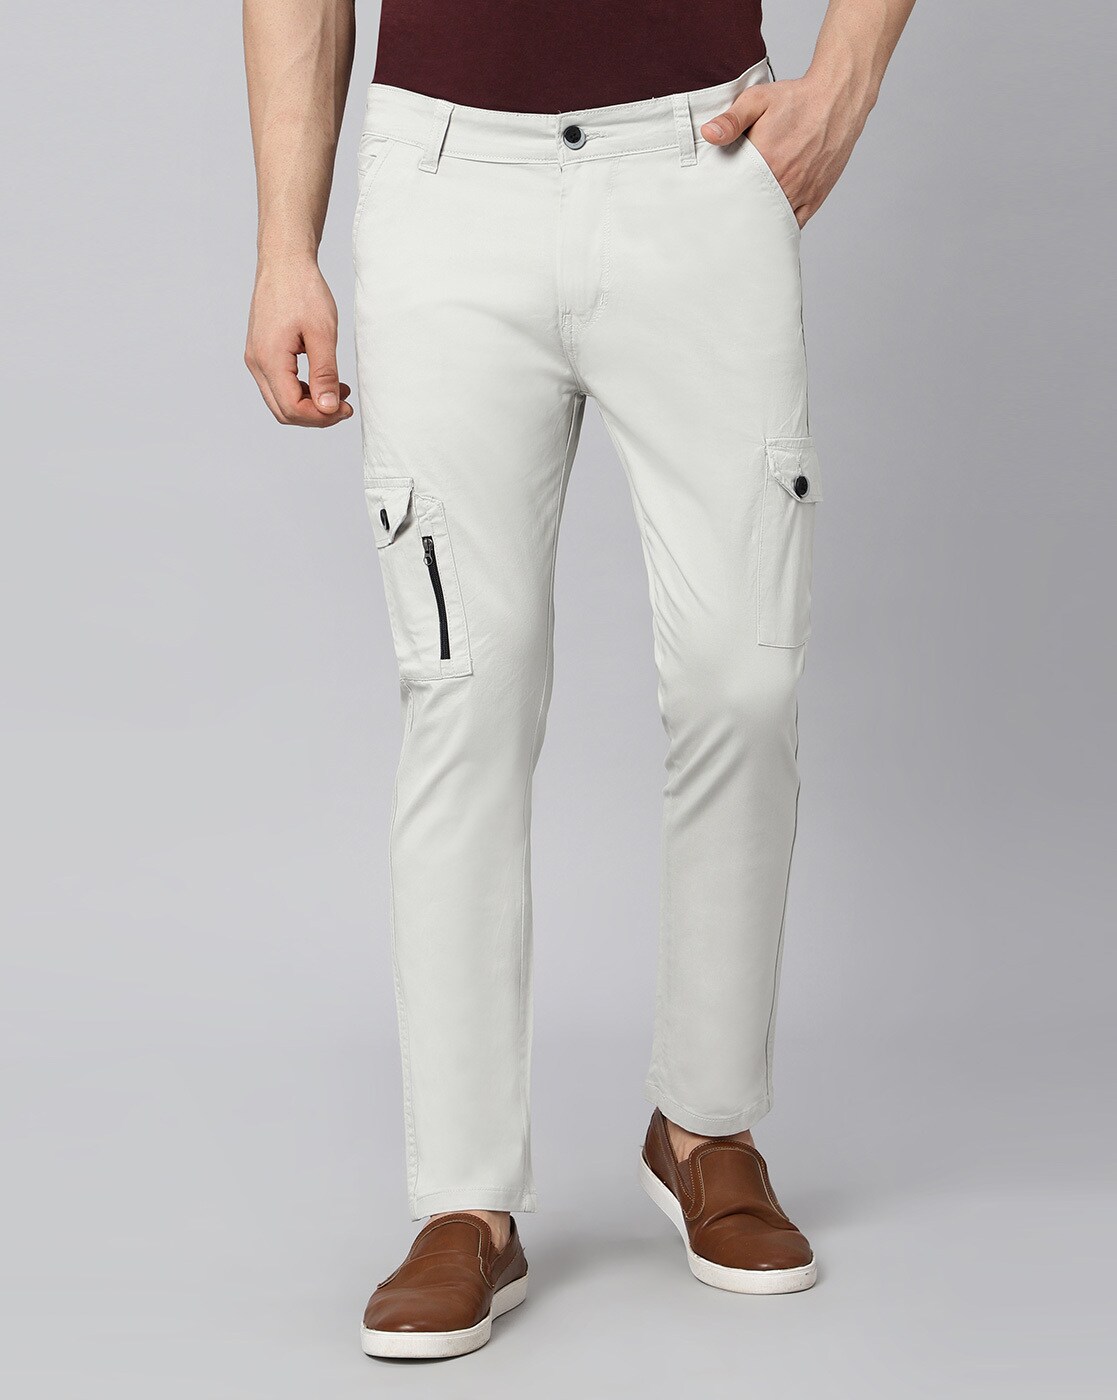 off white caravaggio - Print track pants mens size L | eBay